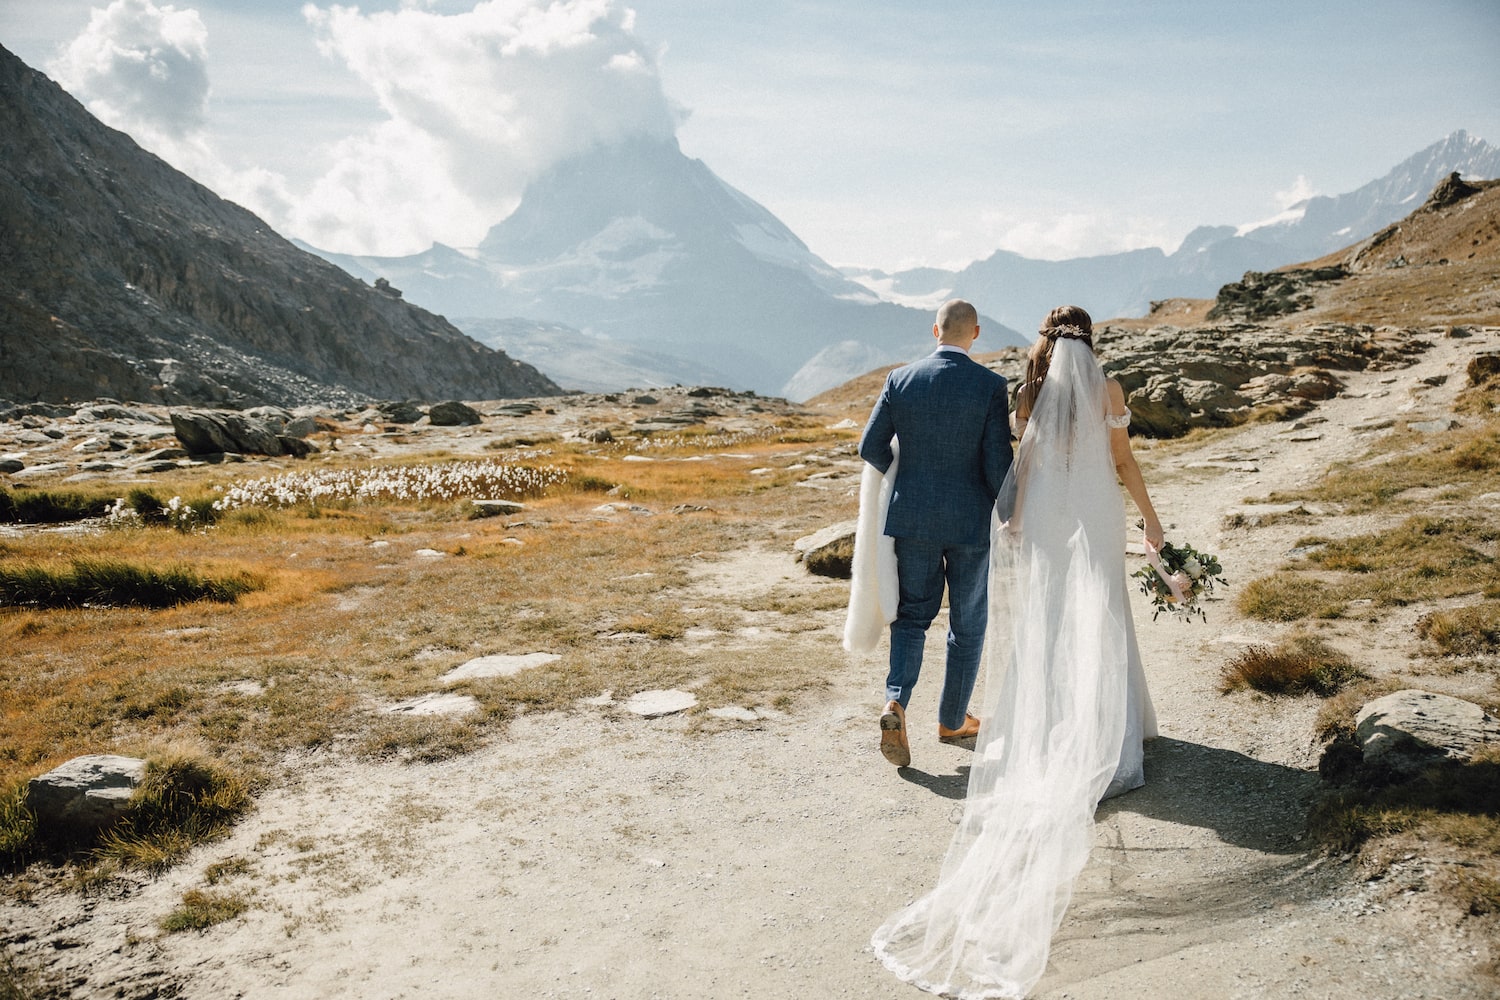 An intimate secular wedding in Switzerland